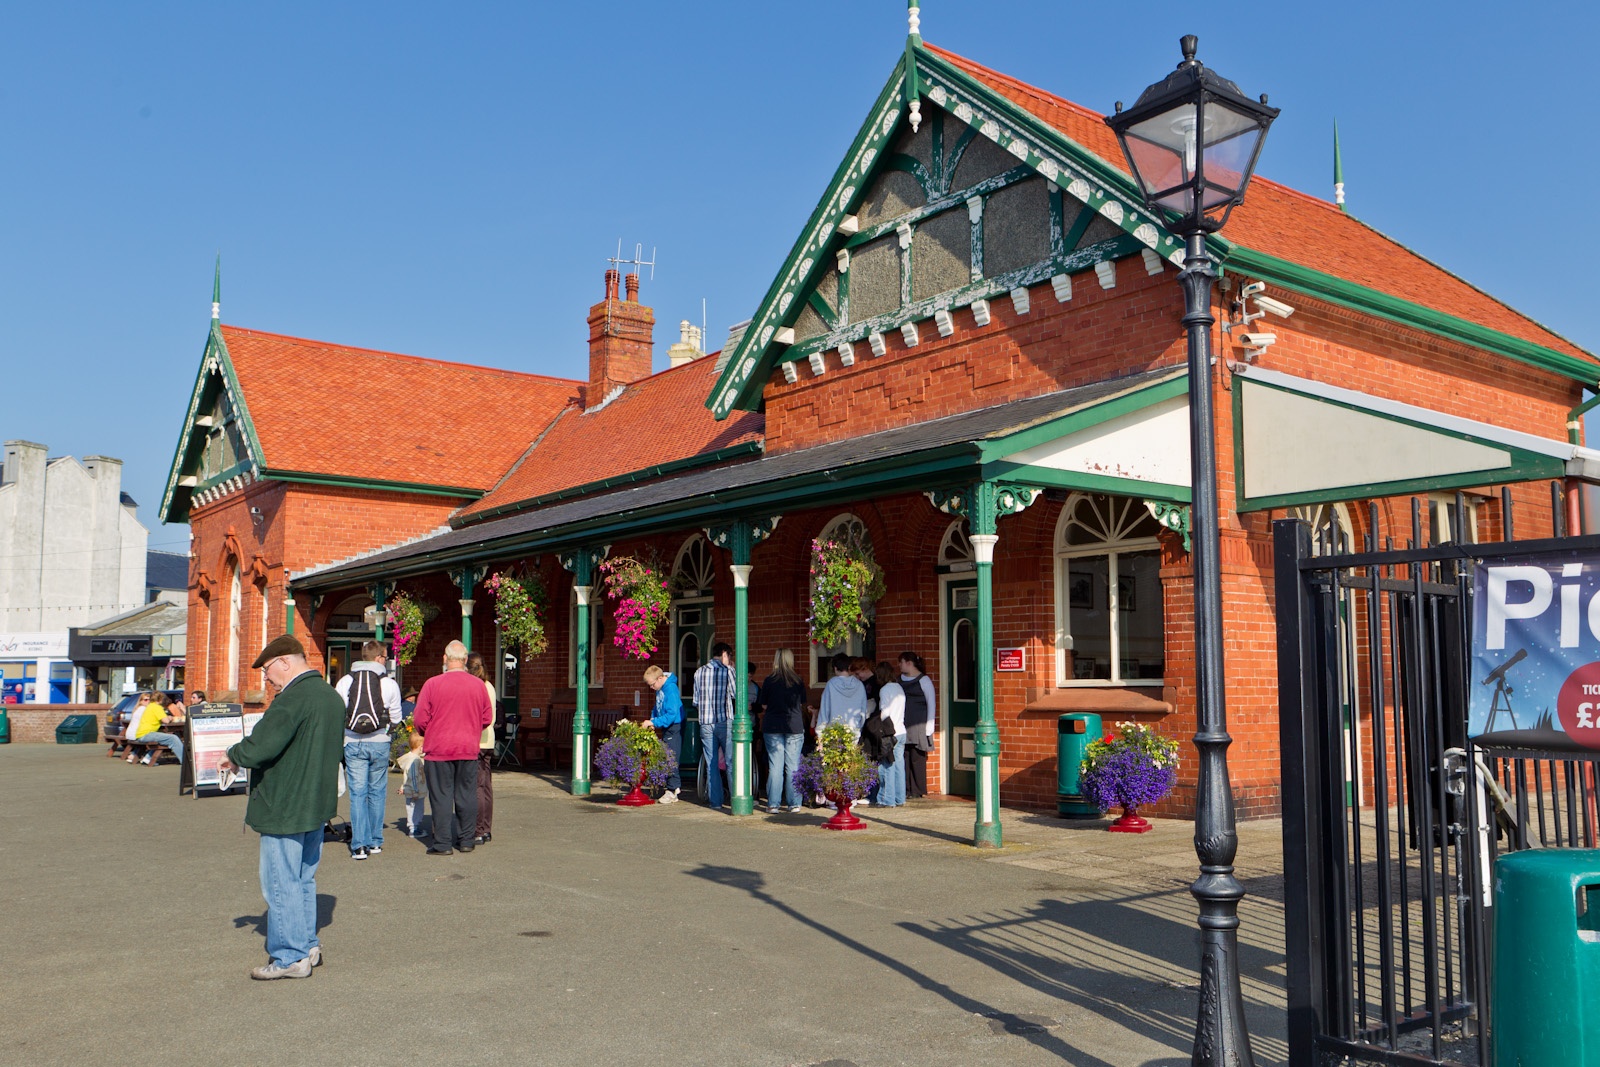 Port Erin Railway Station